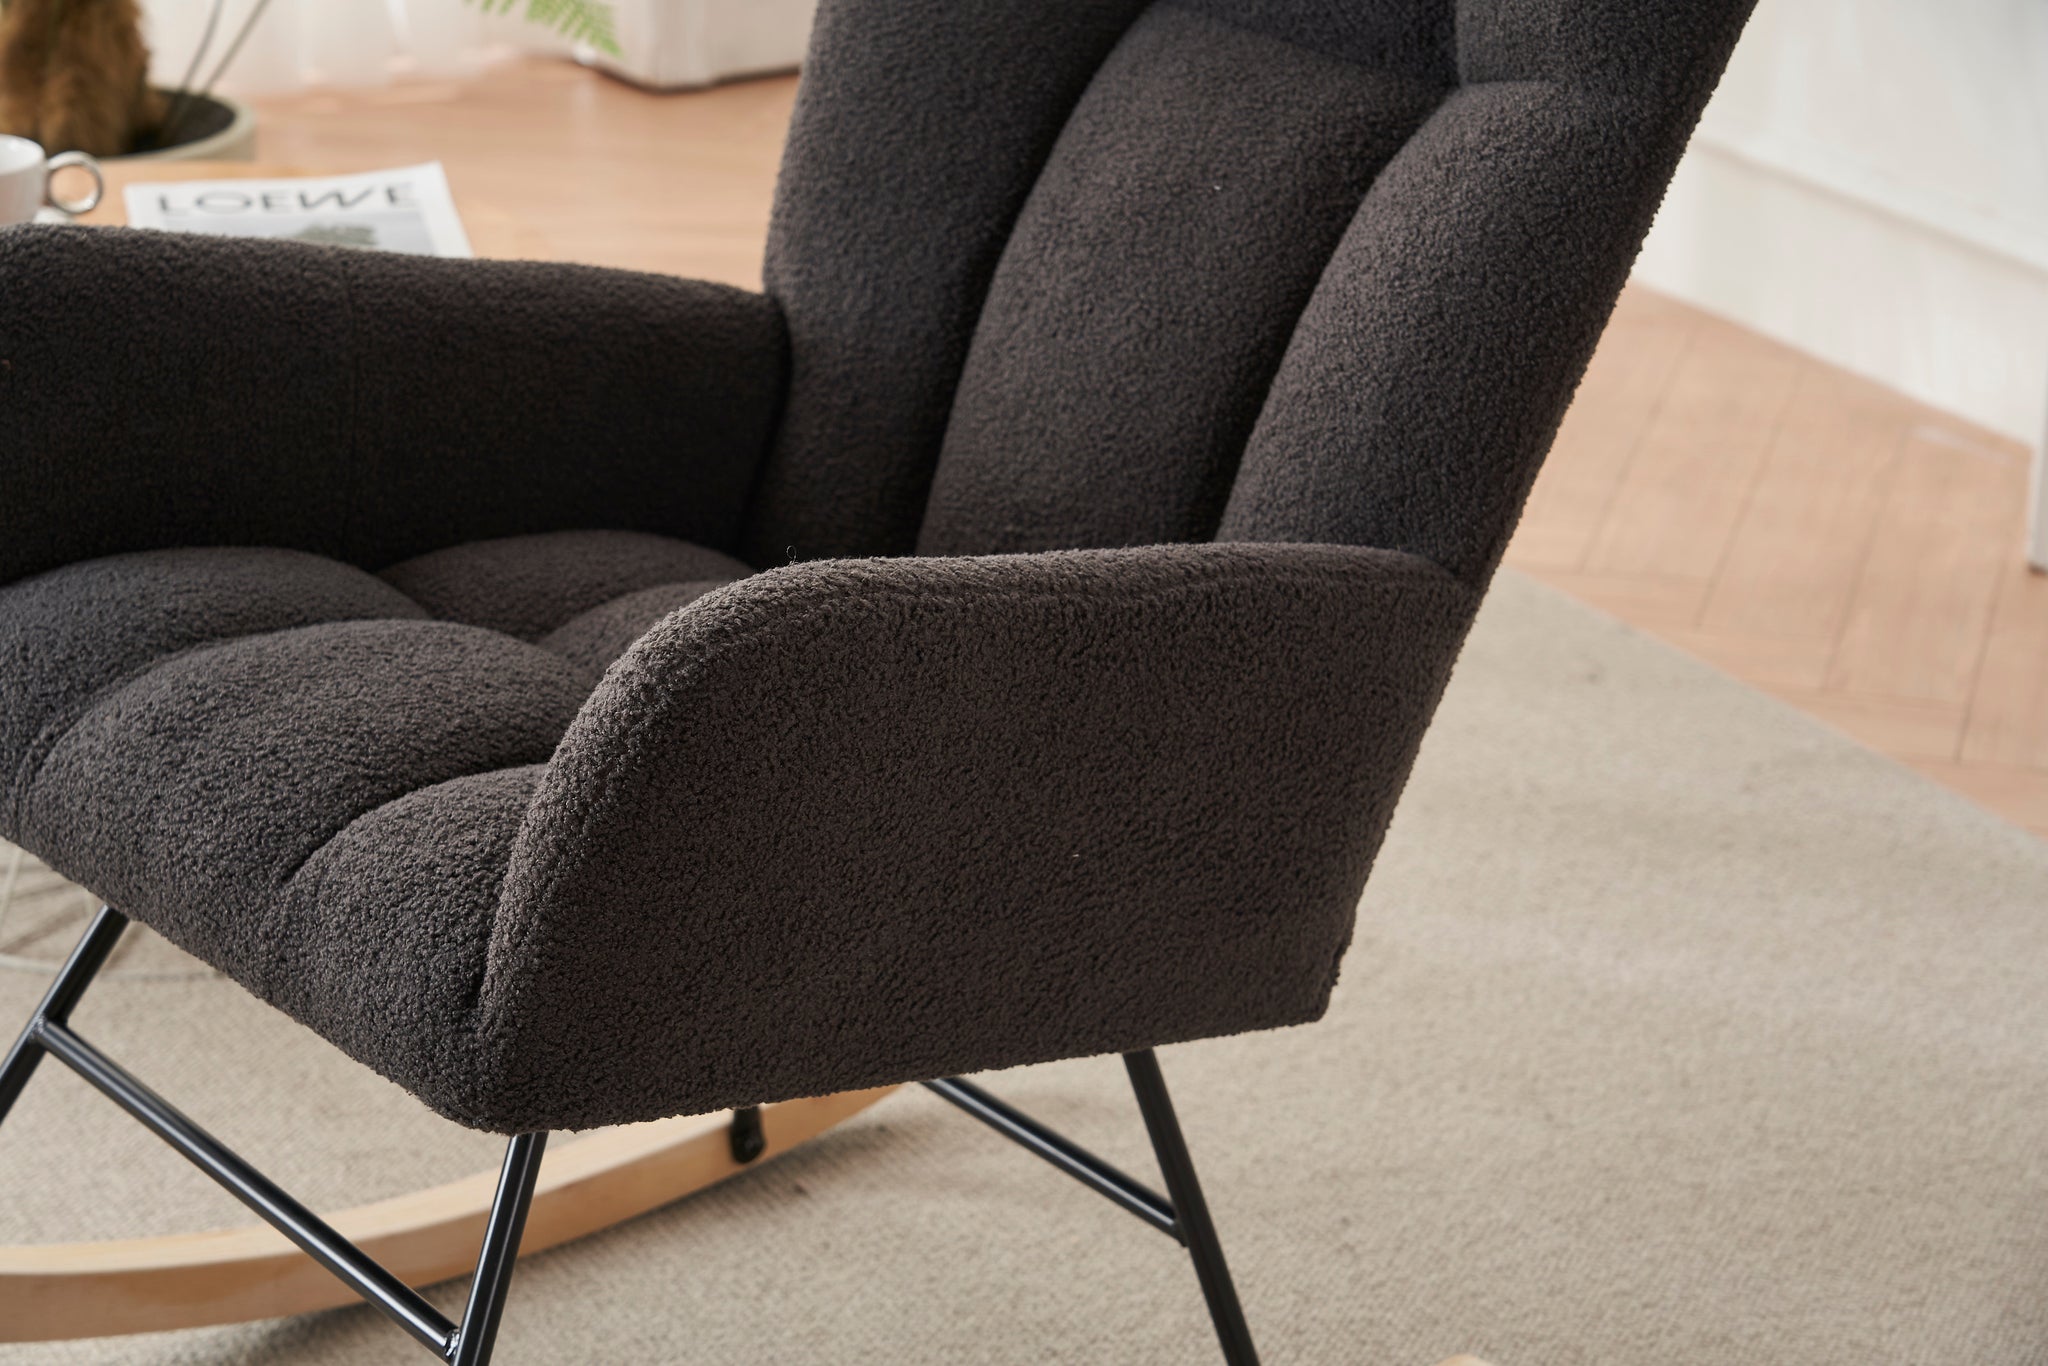 Rocking Chair Nursery, Solid Wood Legs Reading Chair grey teddy-primary living space-modern-rocking